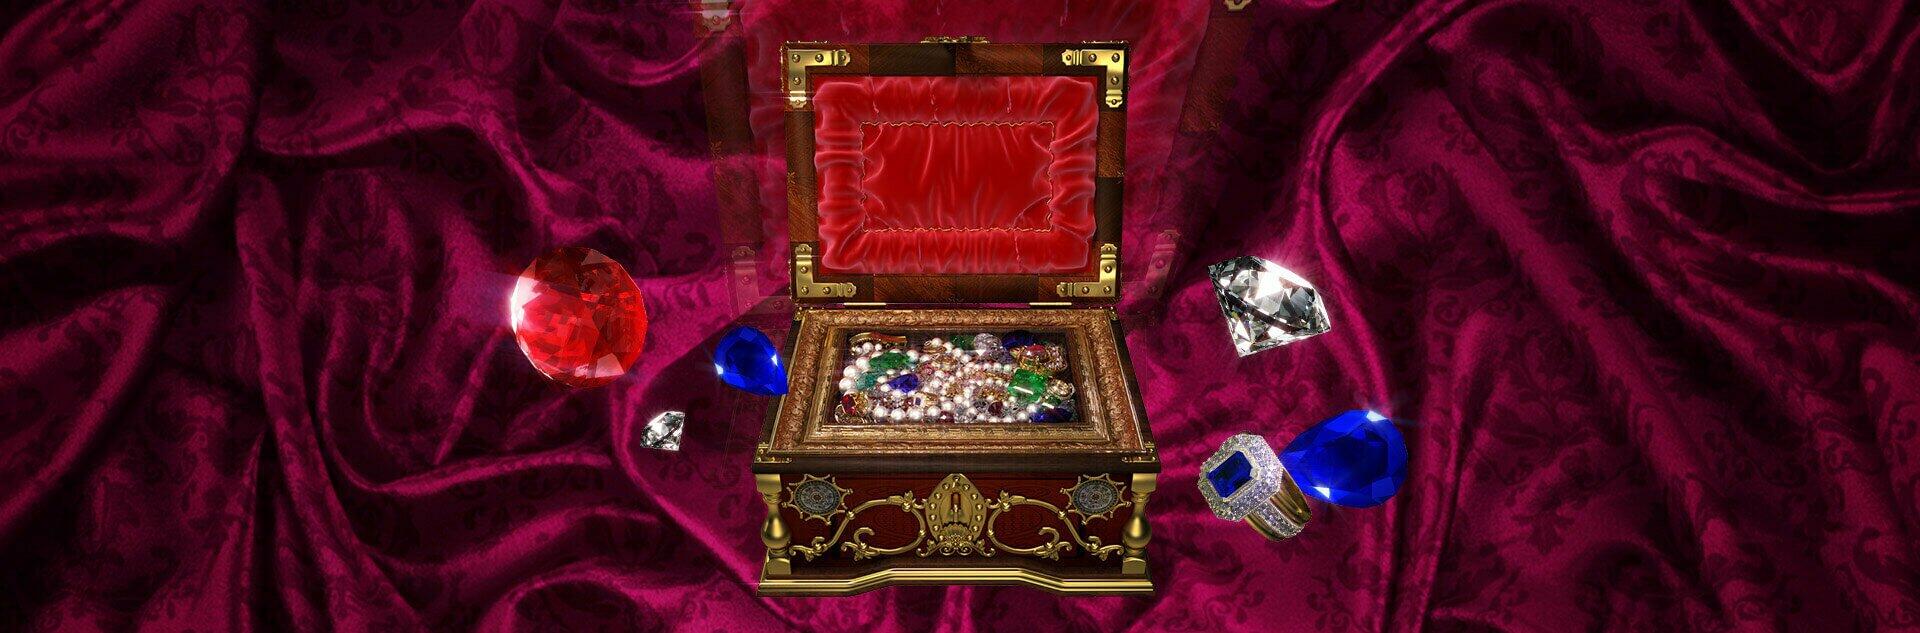 Jewel Box Slot